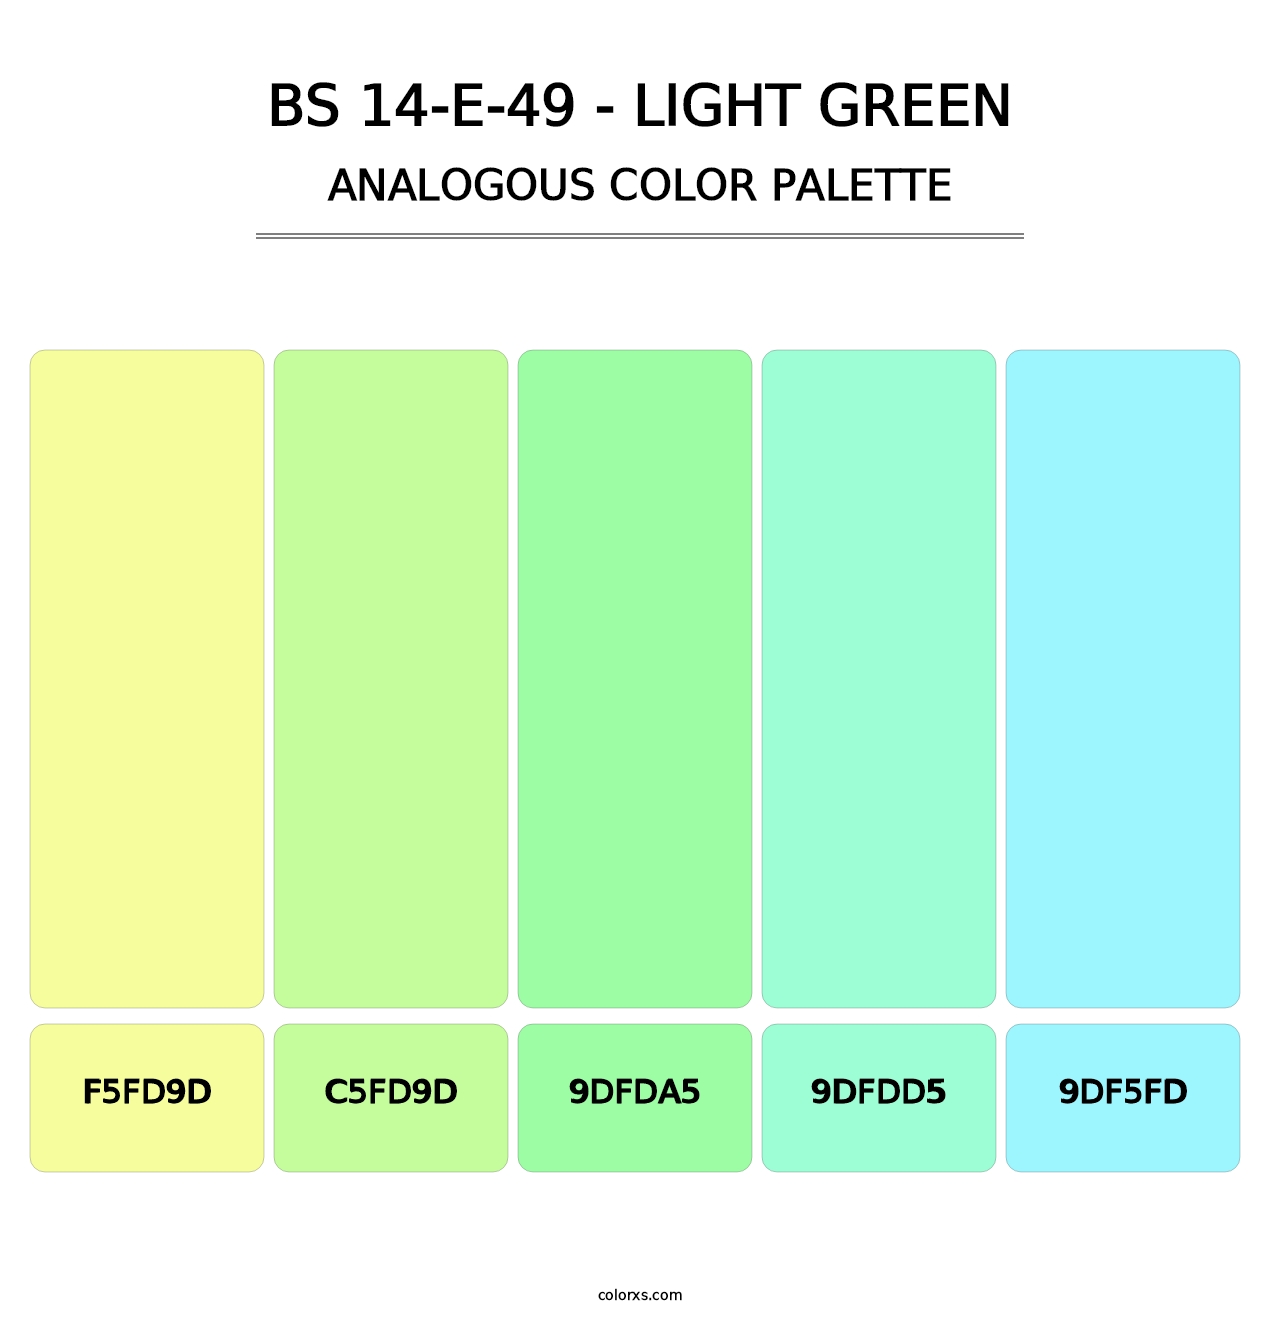 BS 14-E-49 - Light Green - Analogous Color Palette